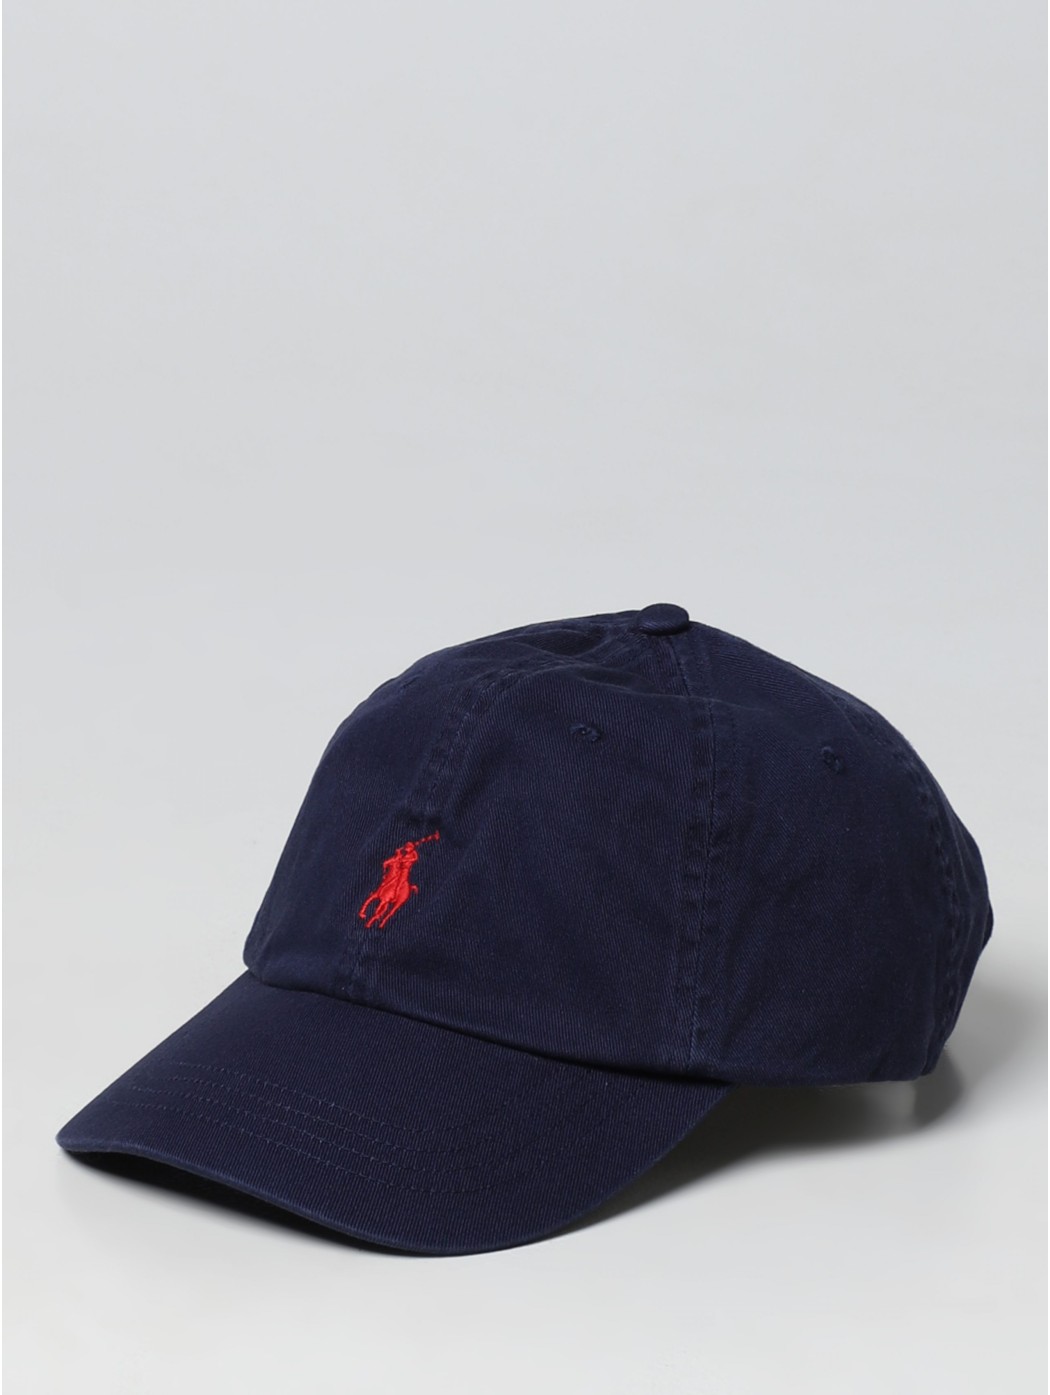 Baseball hat in blue chino...